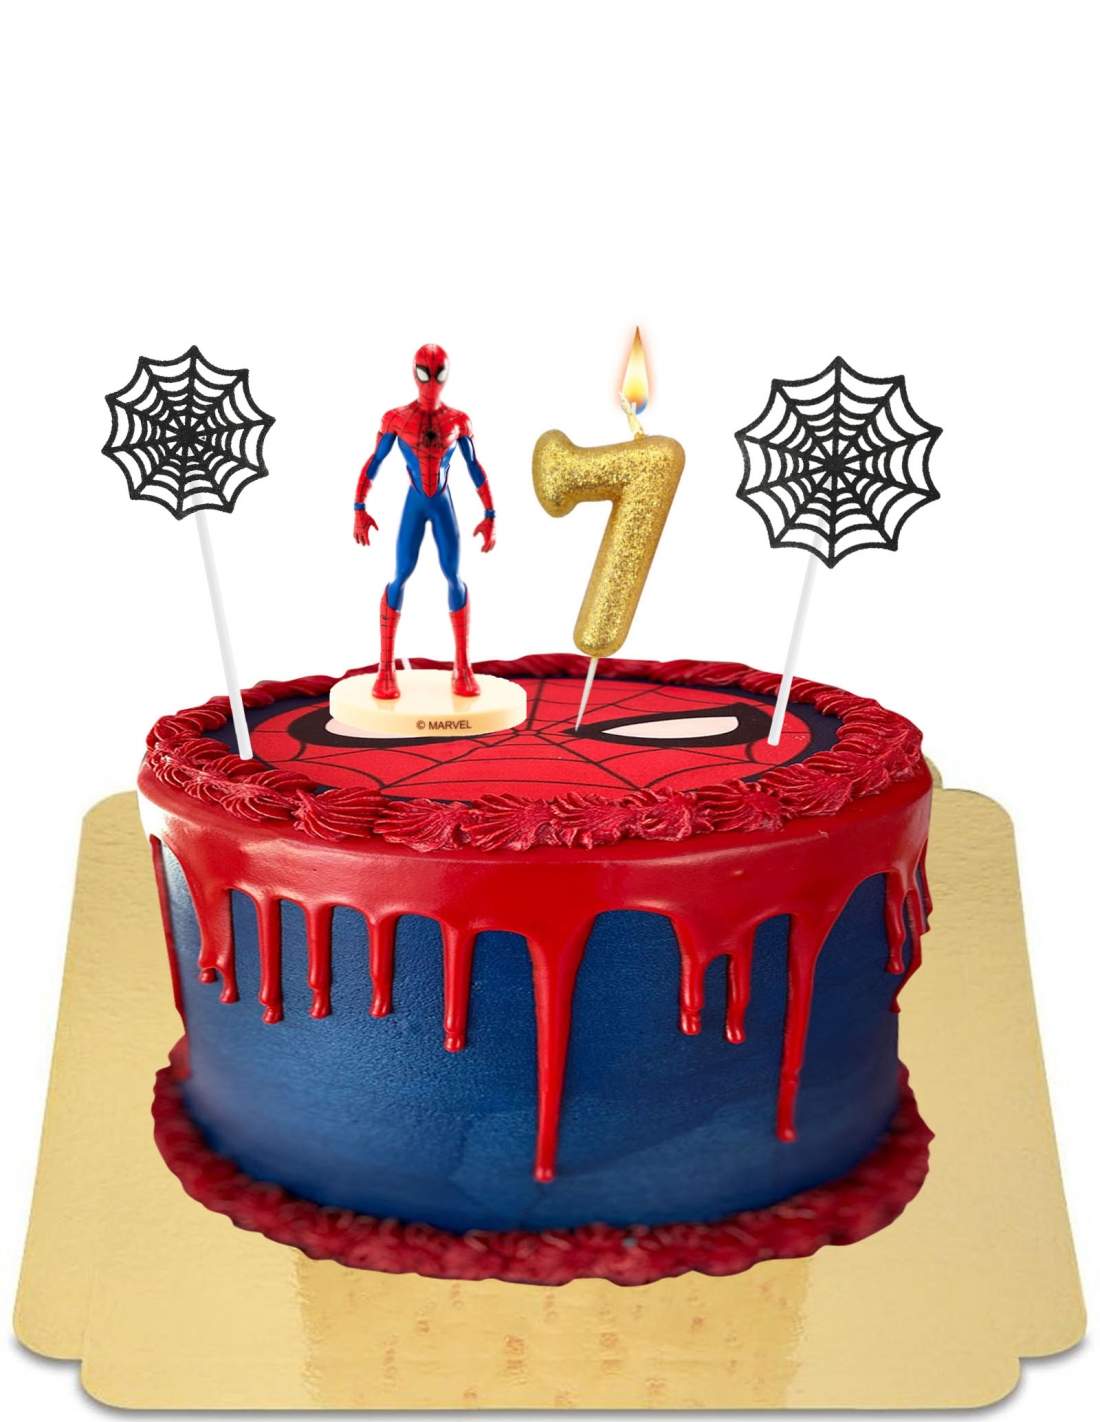 https://gateausansoeufs.com/5856-thickbox_default/drip-cake-spiderman-rouge-et-bleu-a-figurine-et-toile-d-araignee-vegan-sans-gluten.jpg